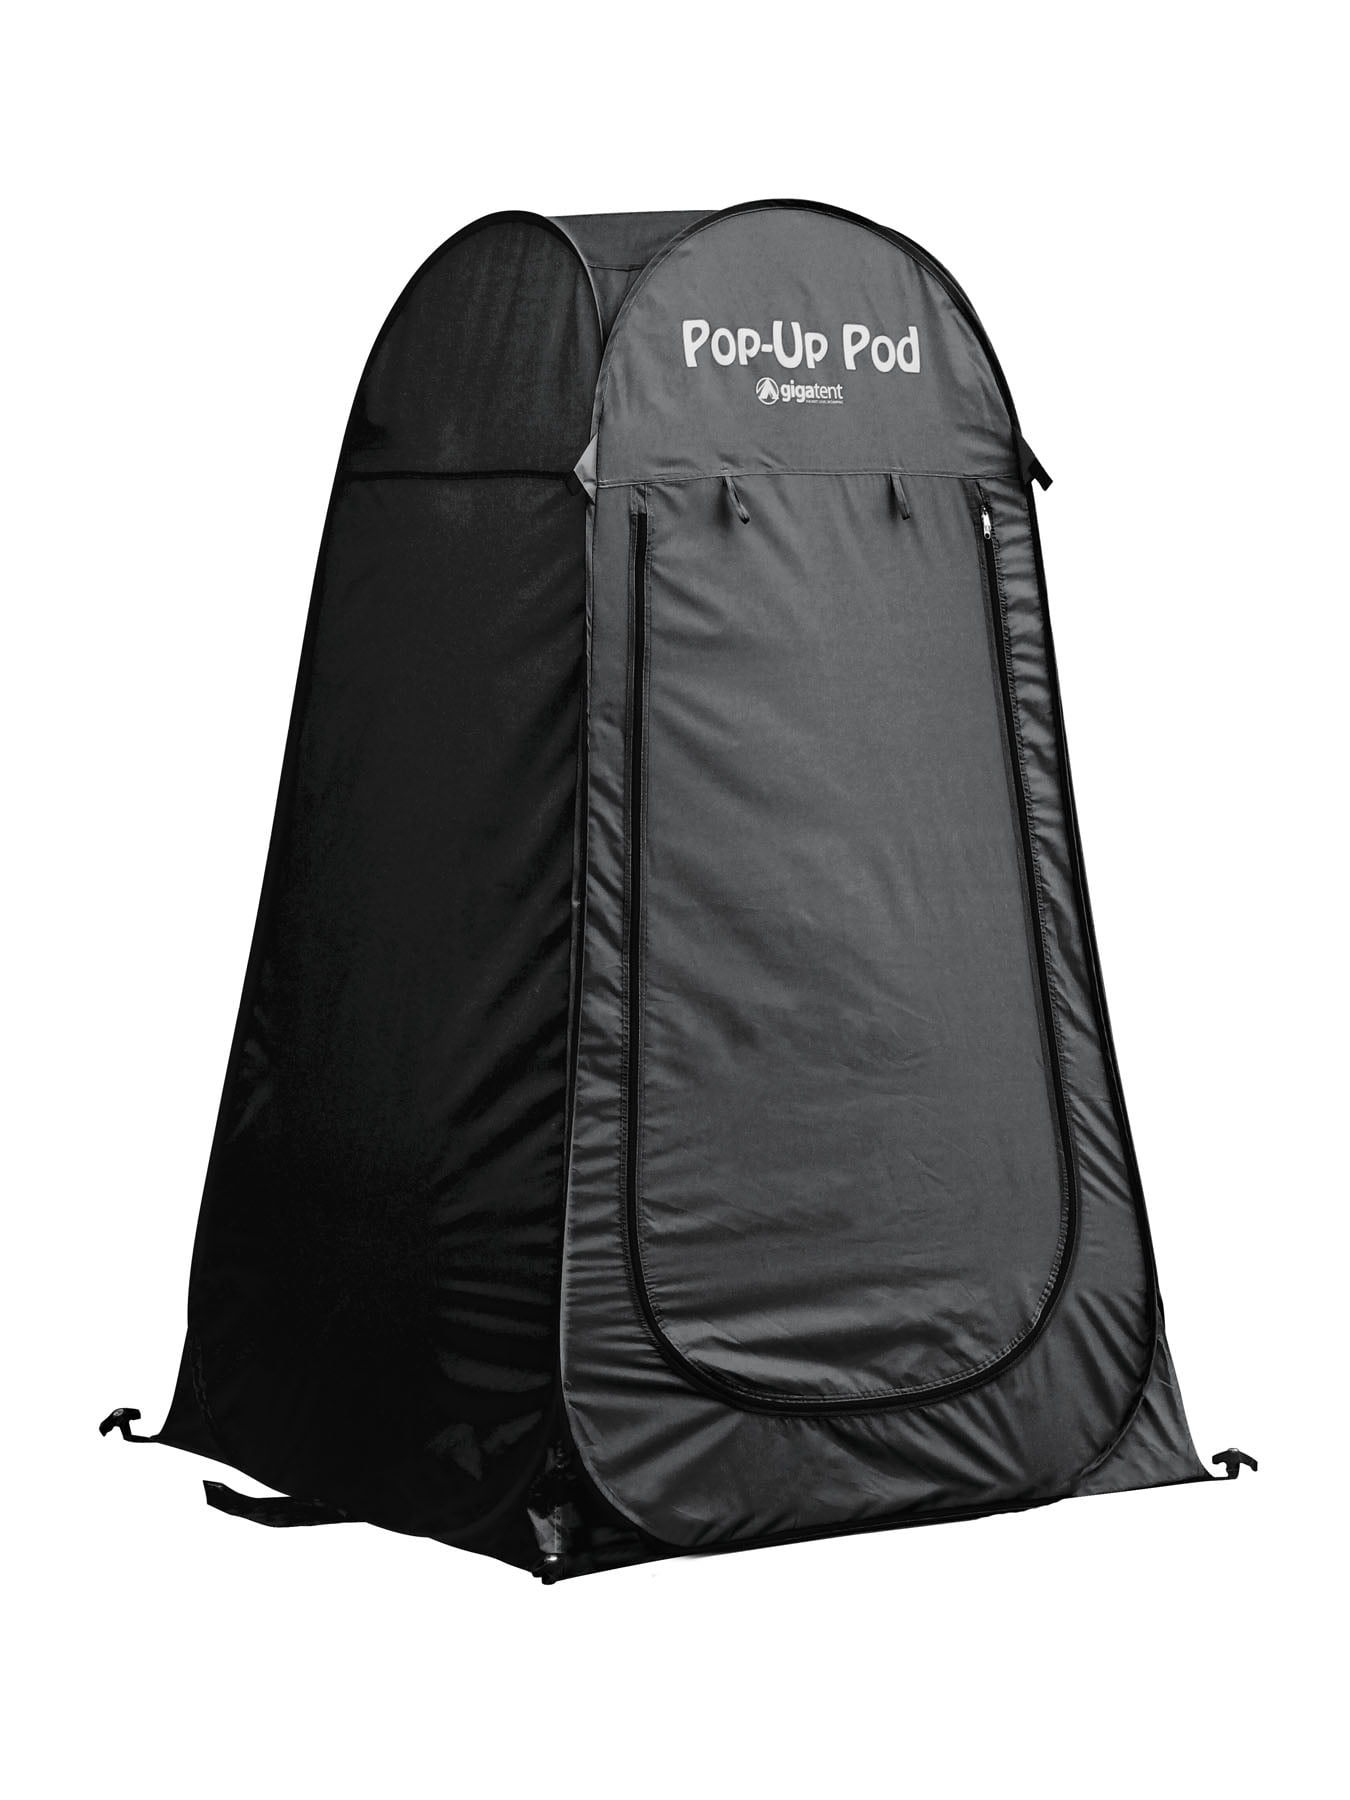 GigaTent Portable Pop Up Pod Dressing/Changing Room Carrying Bag 